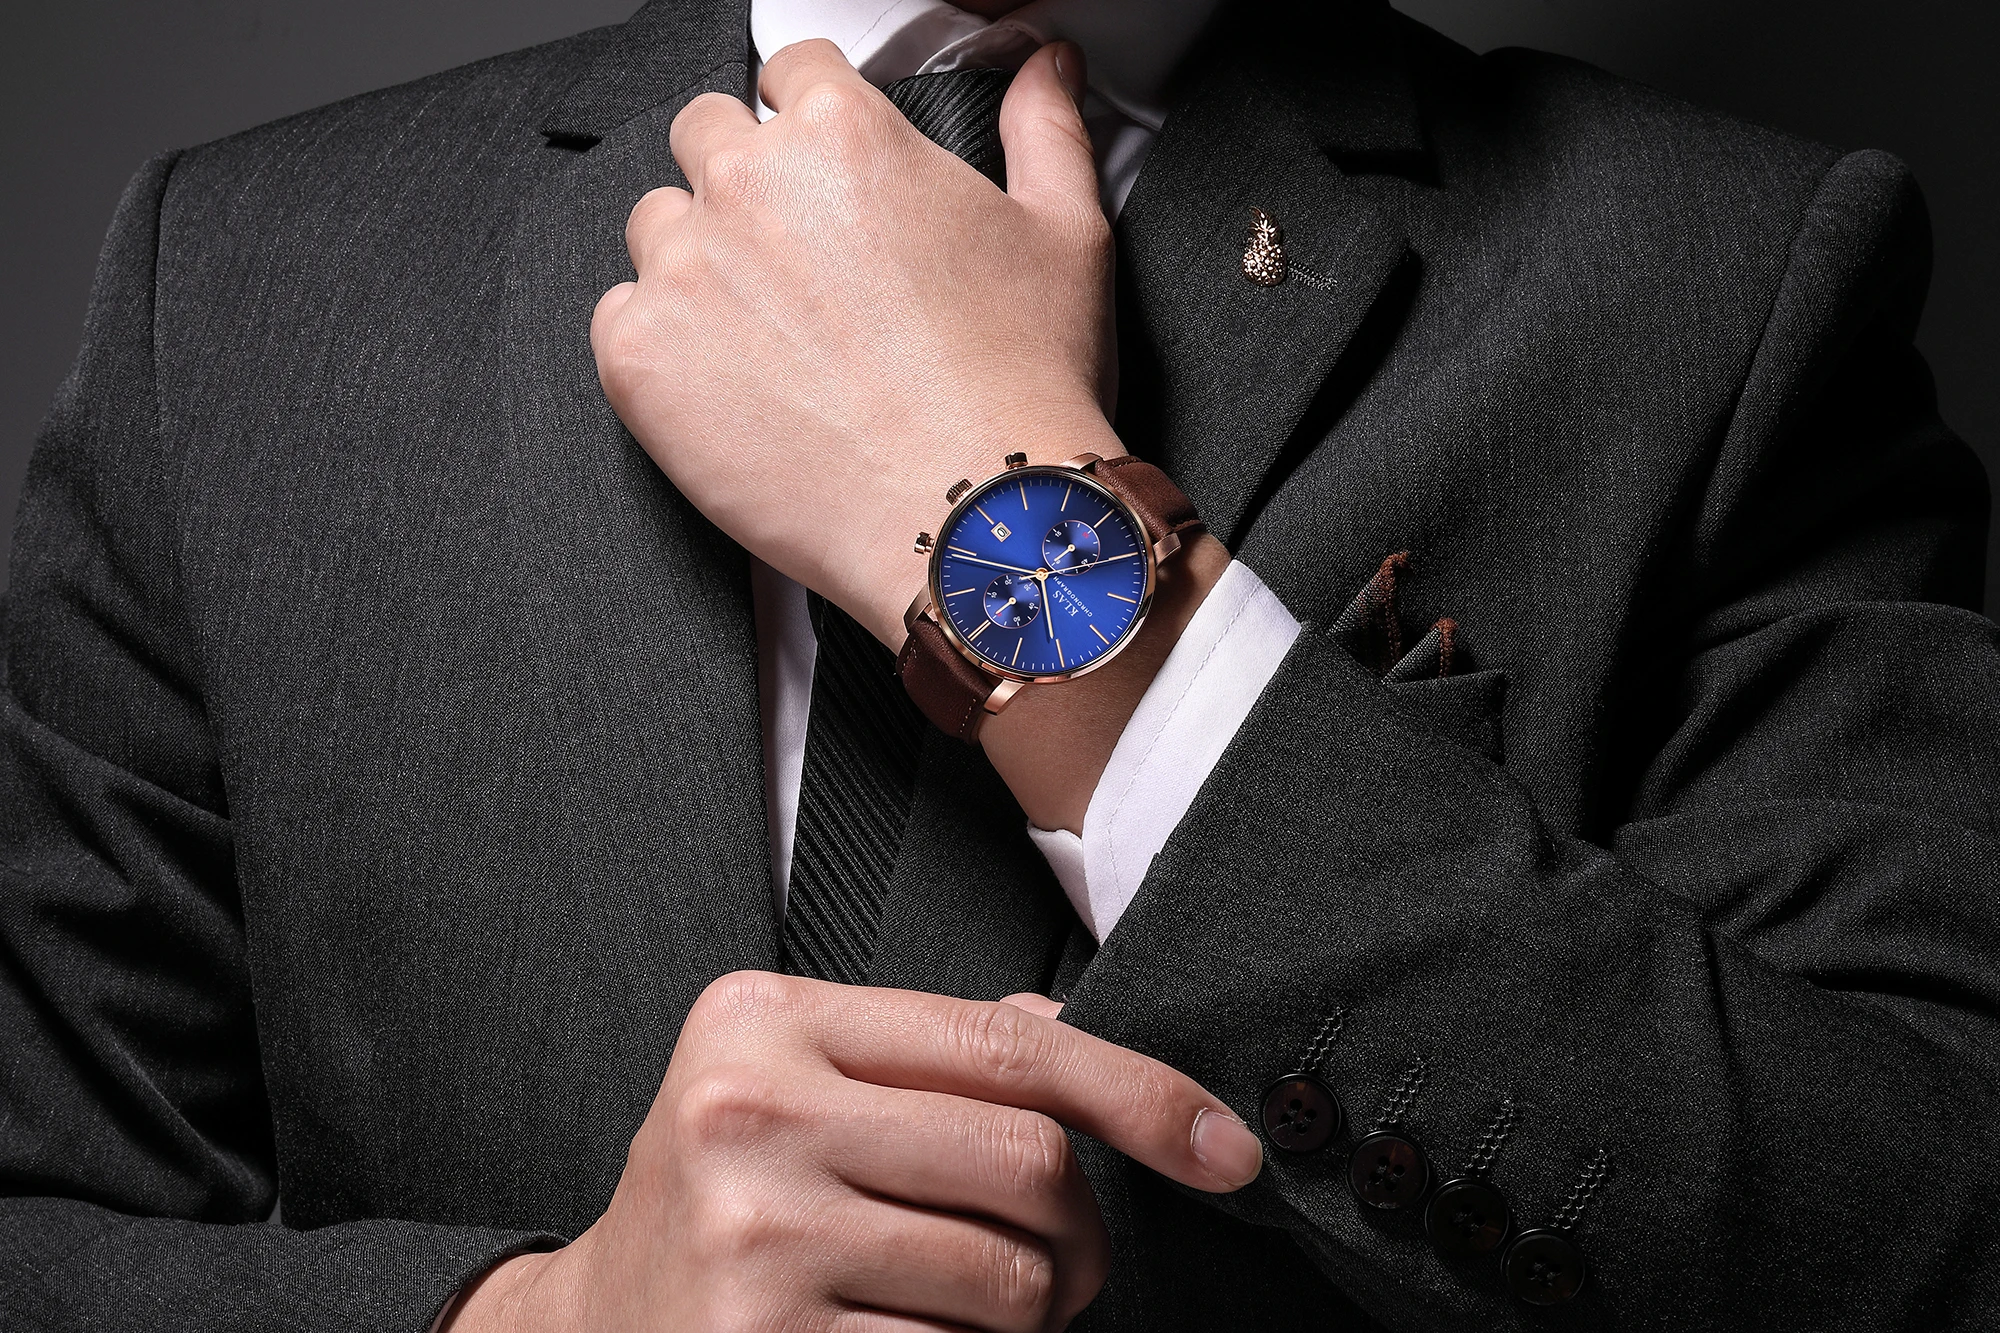 Blue Stainless Steel Disial 2021 Launch Fashion Quartz Watch Wrist Band Table Klas Brand